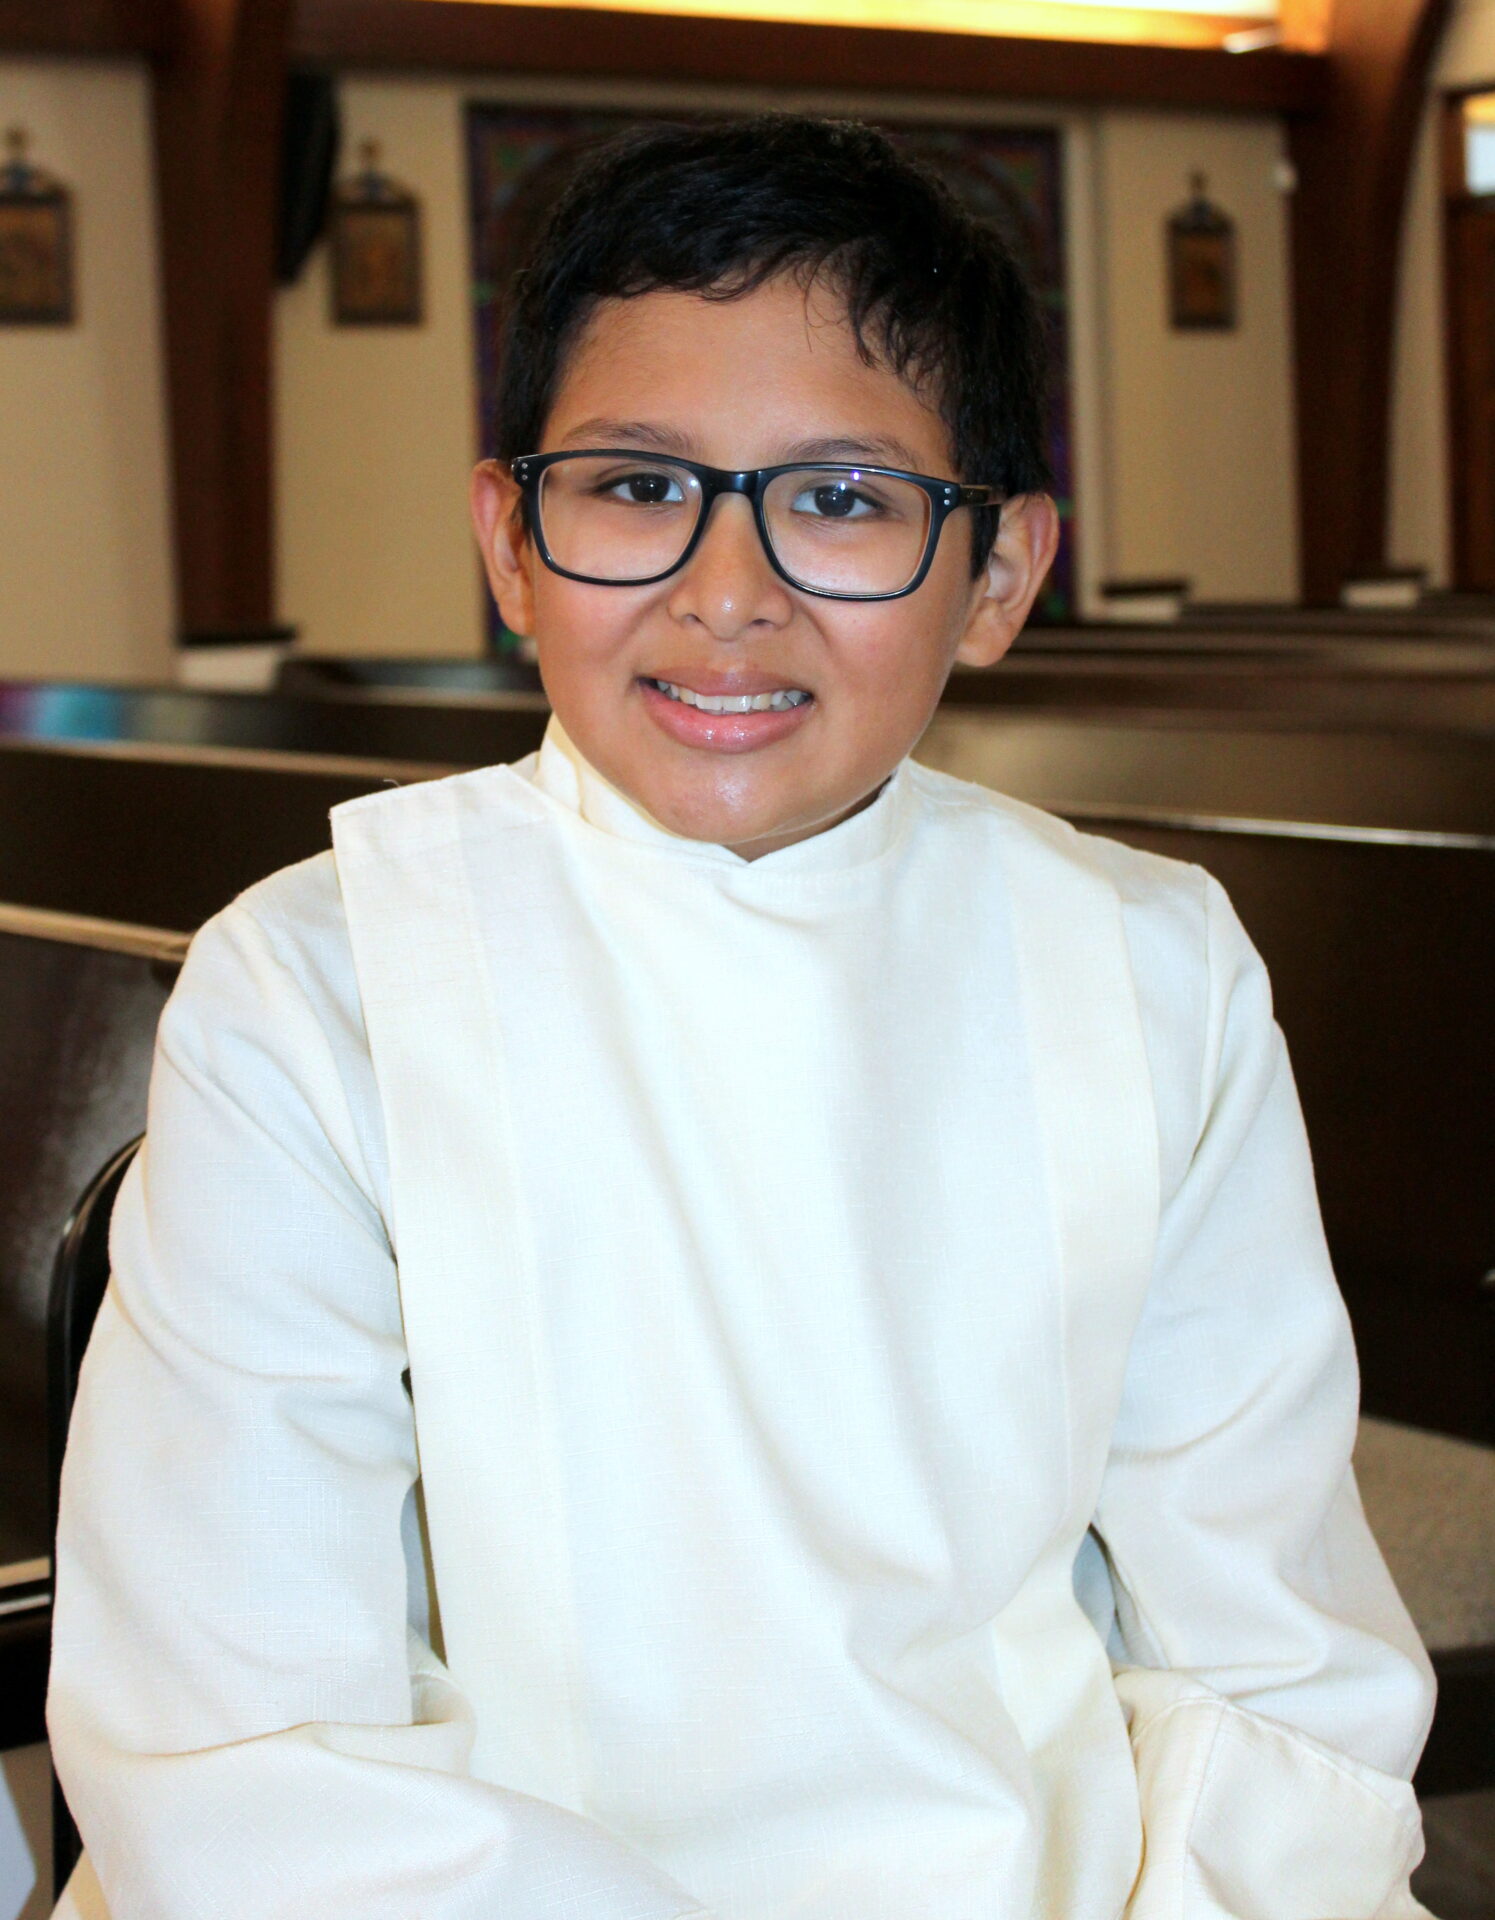 A young boy wearing a black eyeglass